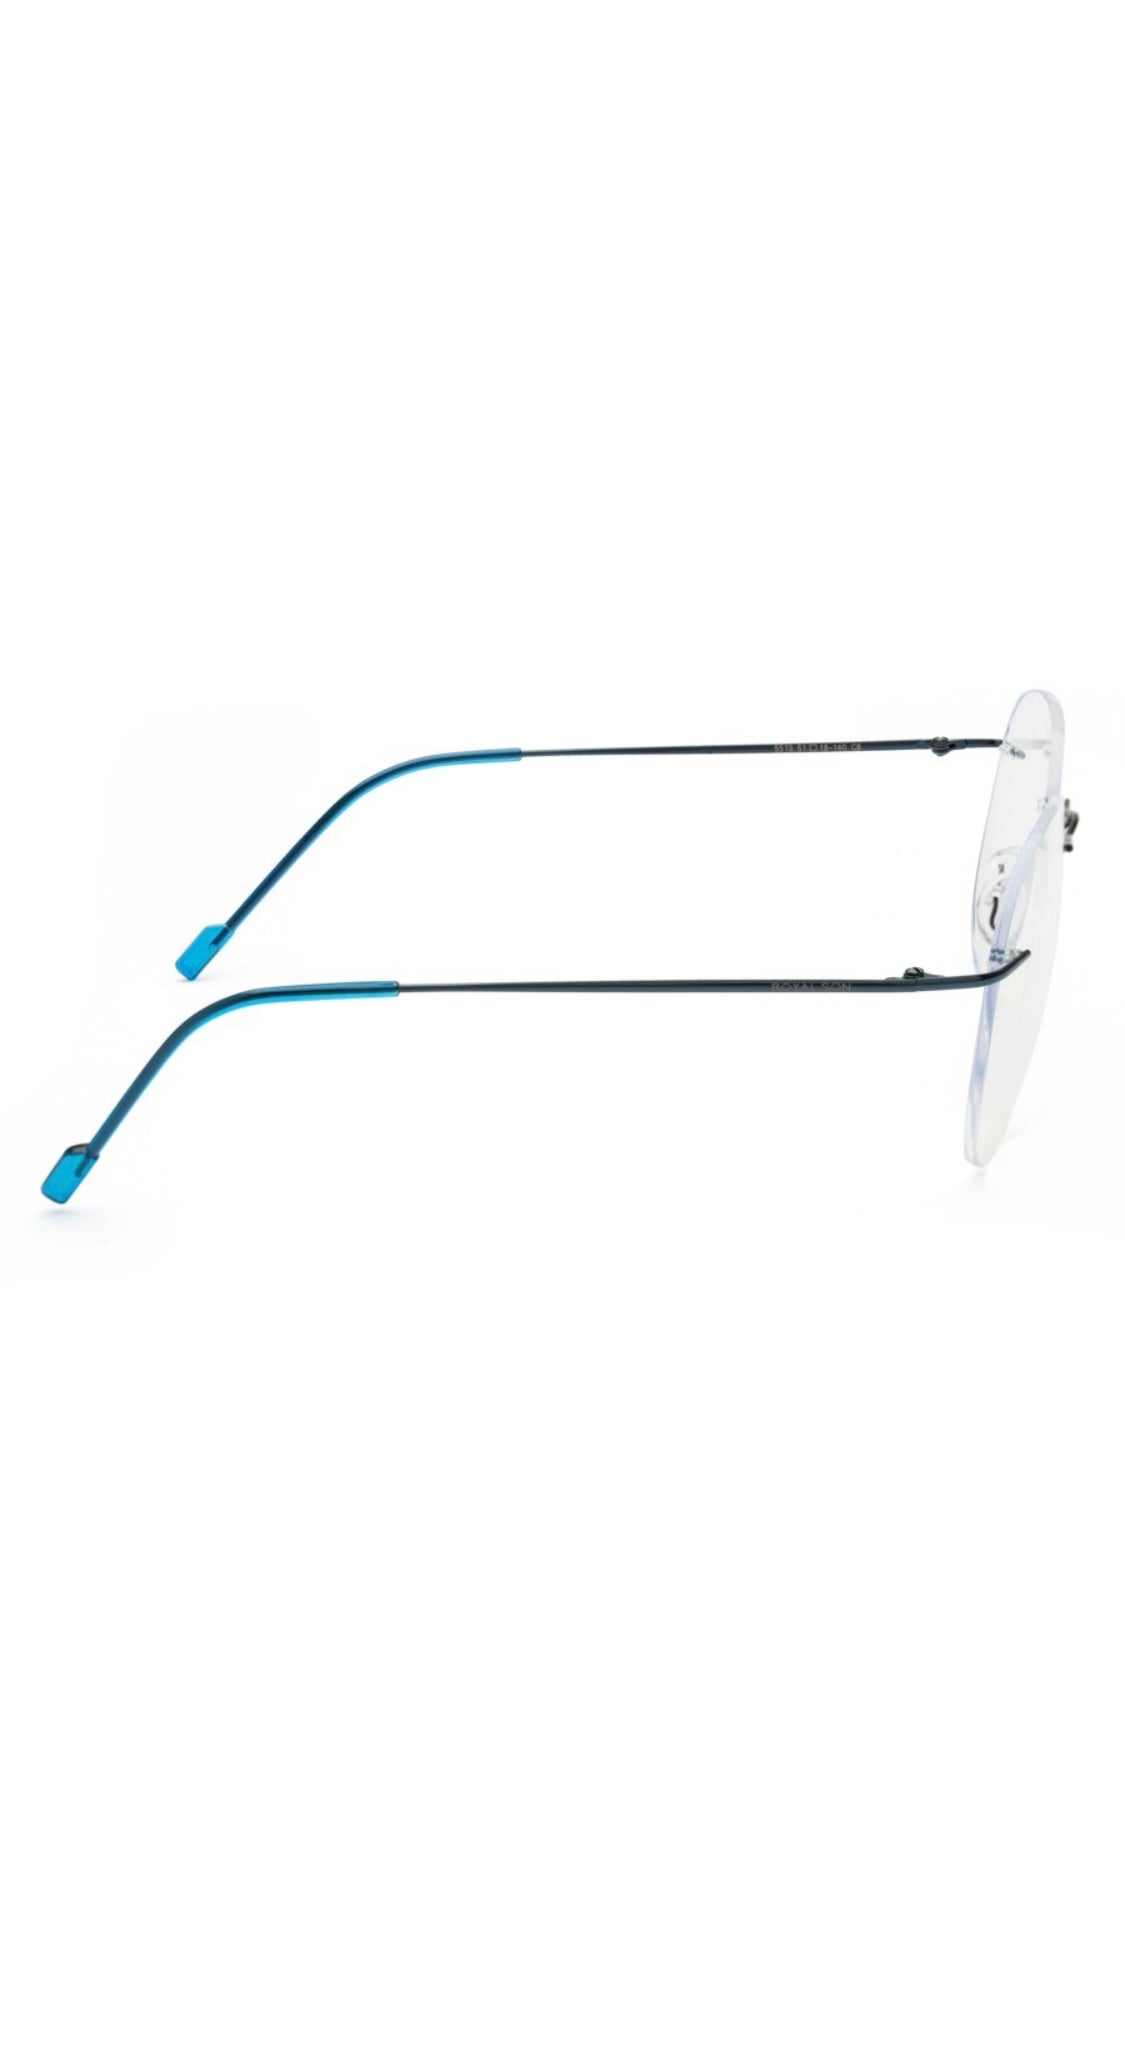 Jodykoes® Rimless Aviator Frame Zero Power Anti Glare Spectacle For Men and Women | Unisex Computer Eyeglasses Light Weight Aviator Frameless Eyewear (Blue) - Jodykoes ®